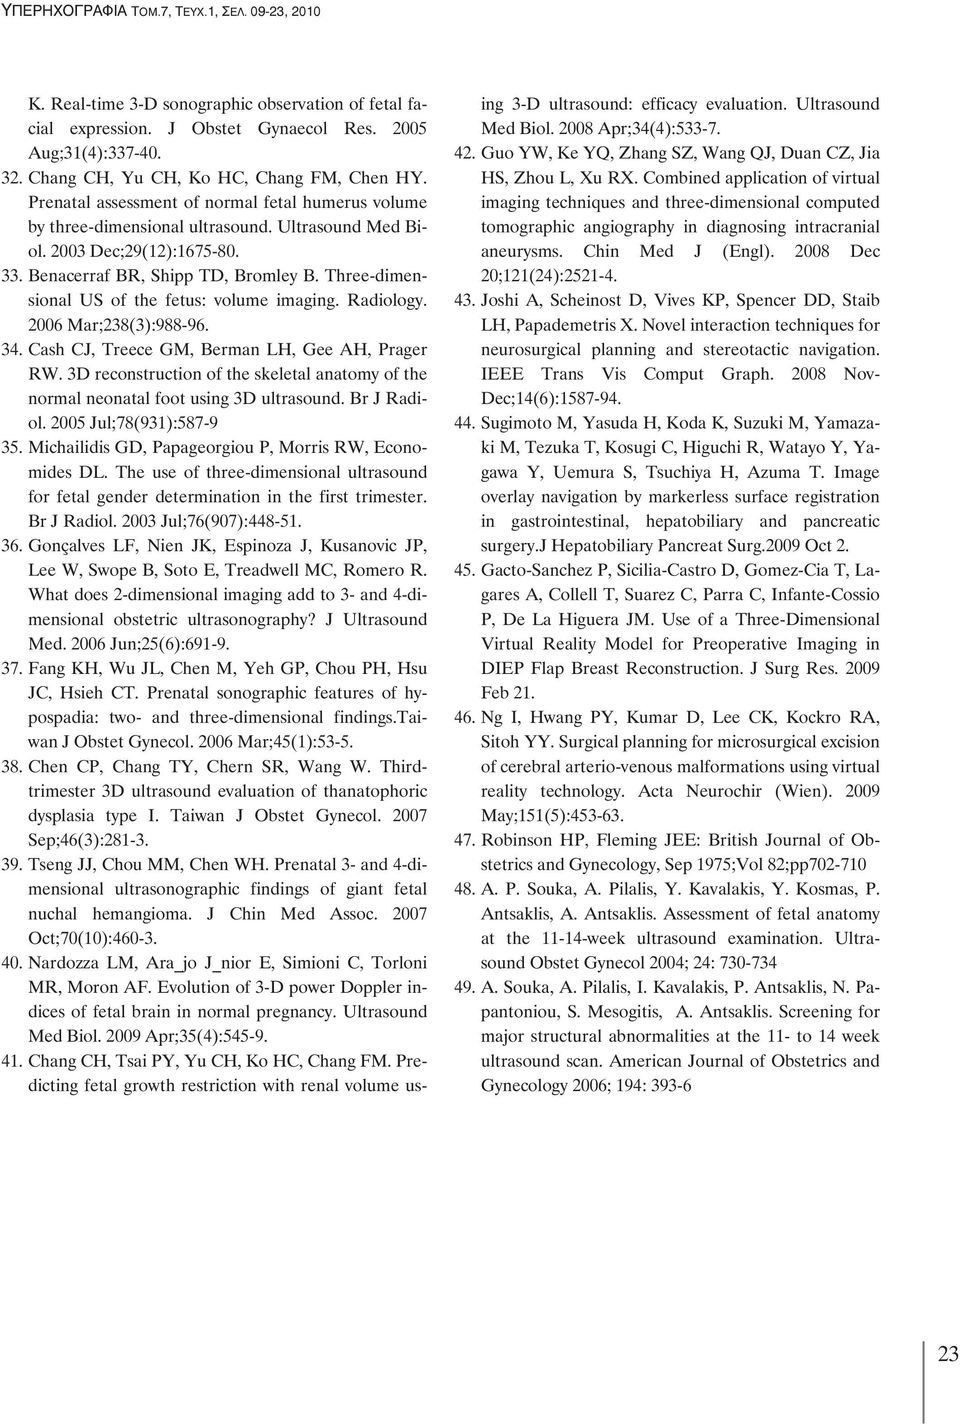 Three-dimensional US of the fetus: volume imaging. Radiology. 2006 Mar;238(3):988-96. 34. Cash CJ, Treece GM, Berman LH, Gee AH, Prager RW.